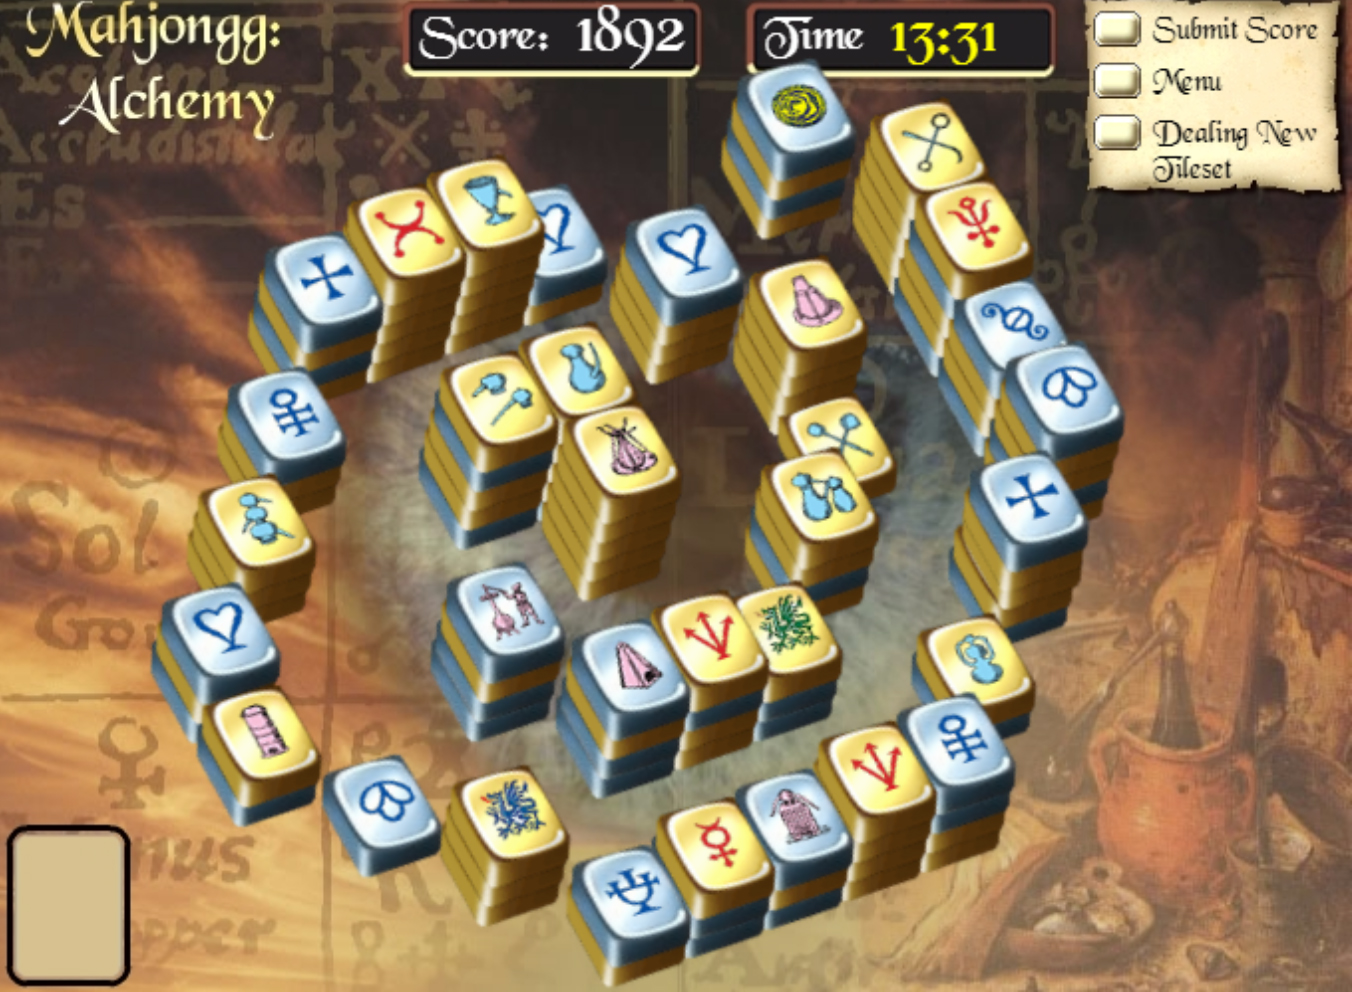 Mahjong Alchemie